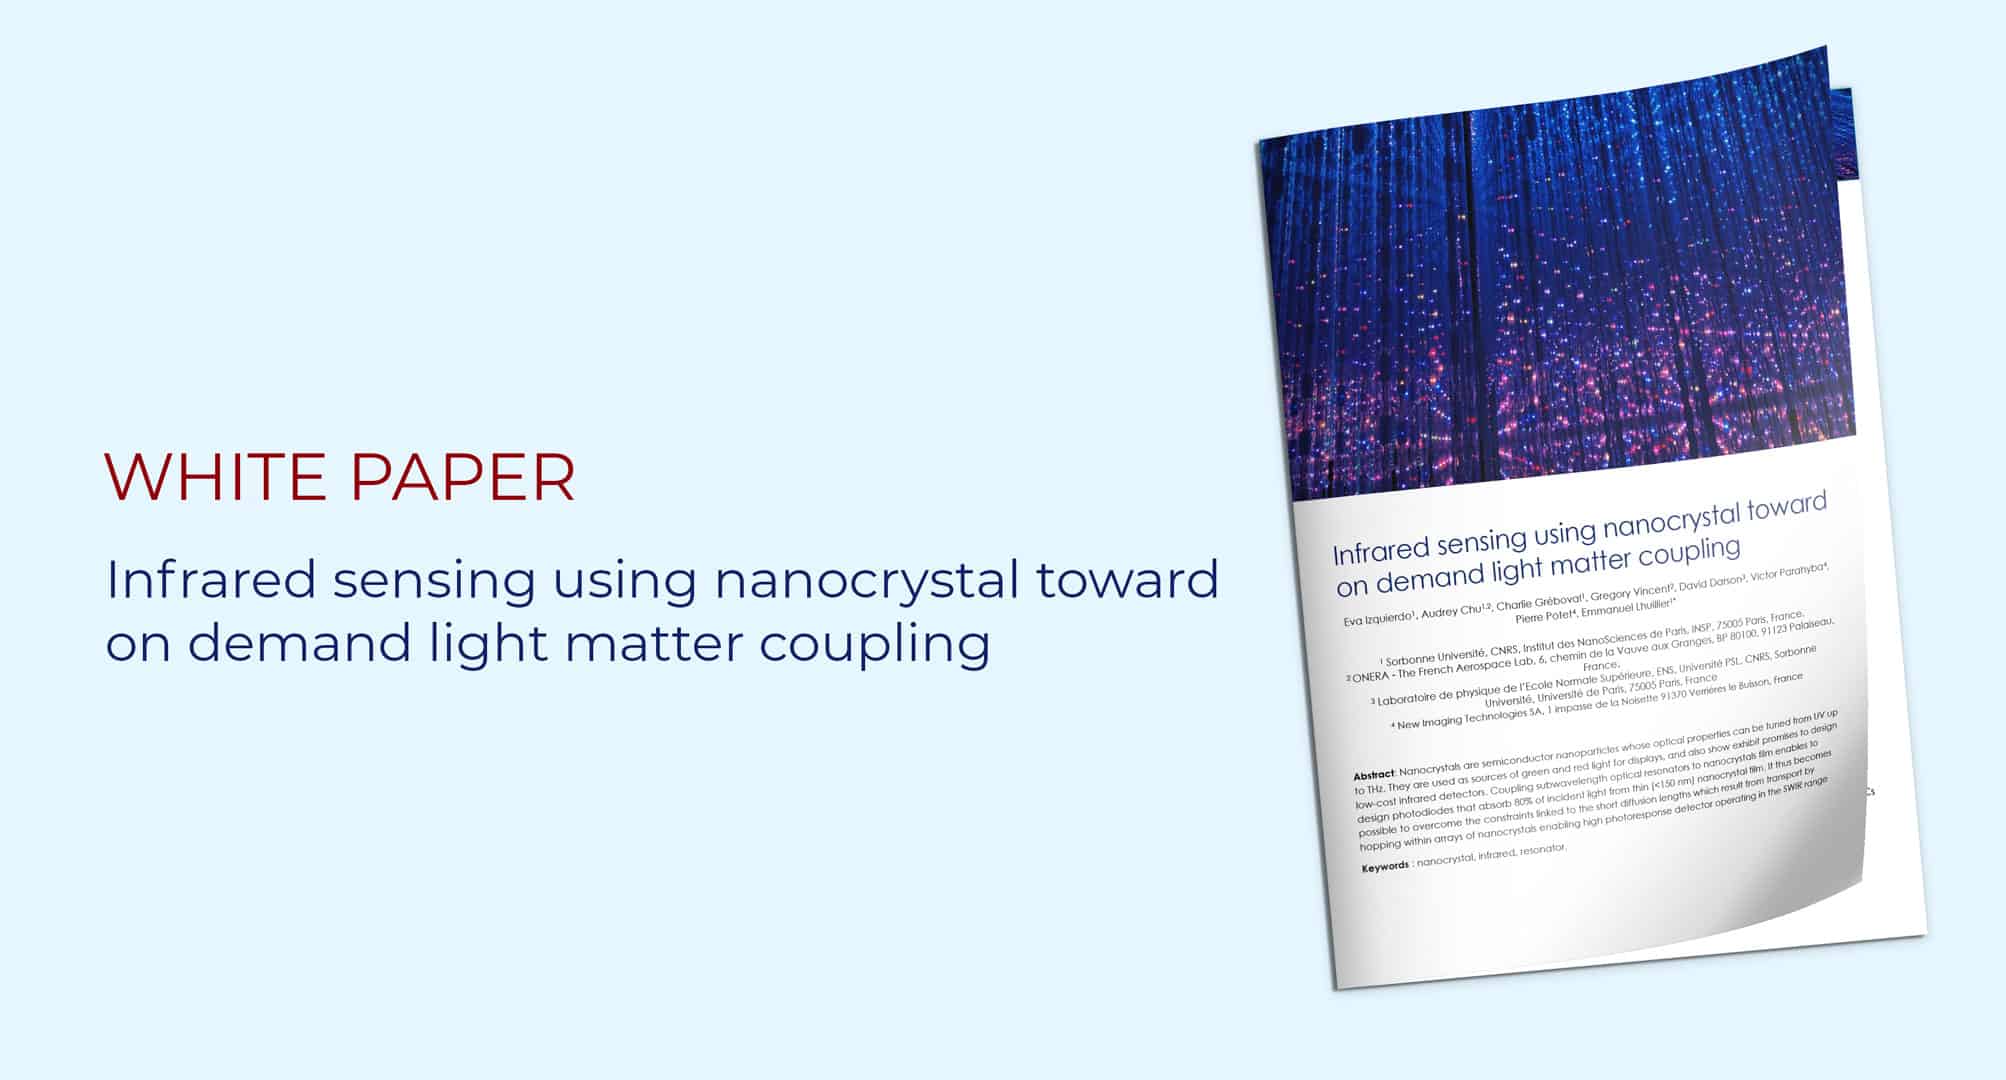 white paper: Infrared sensing using nanocrystal toward on demand light matter coupling